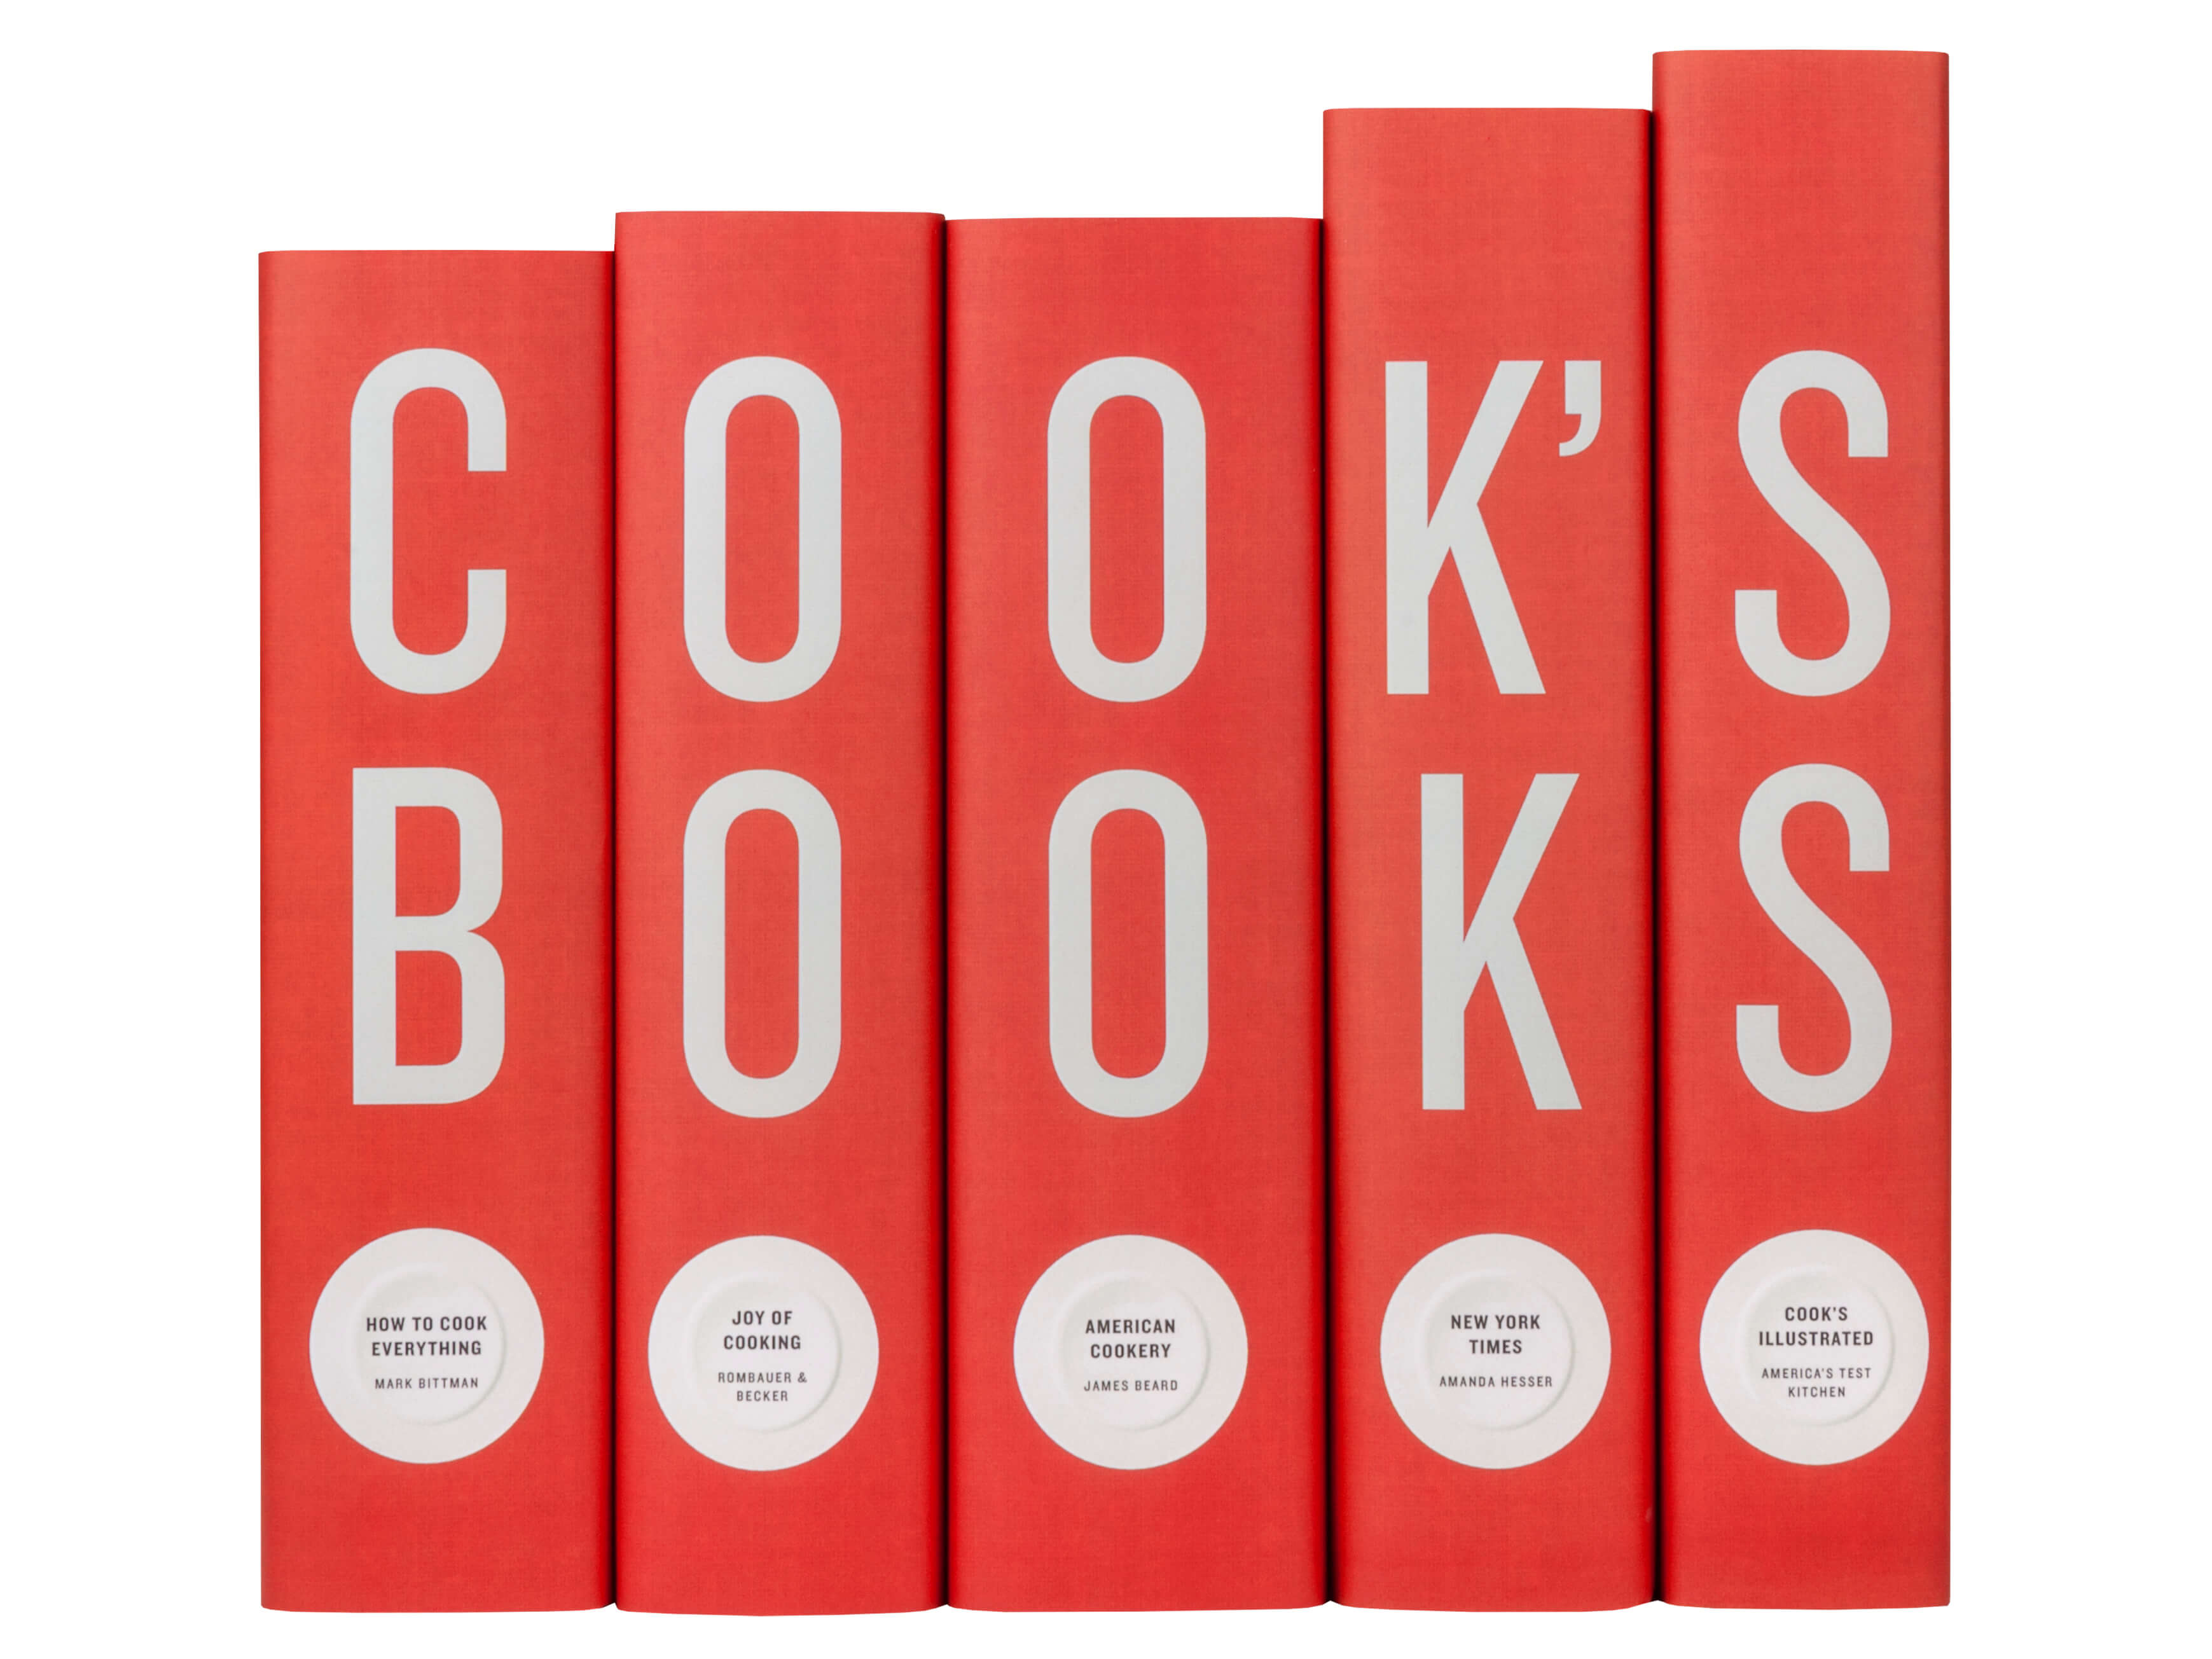 RDCB5-cooks-books-red-front-Higher-Res.jpg